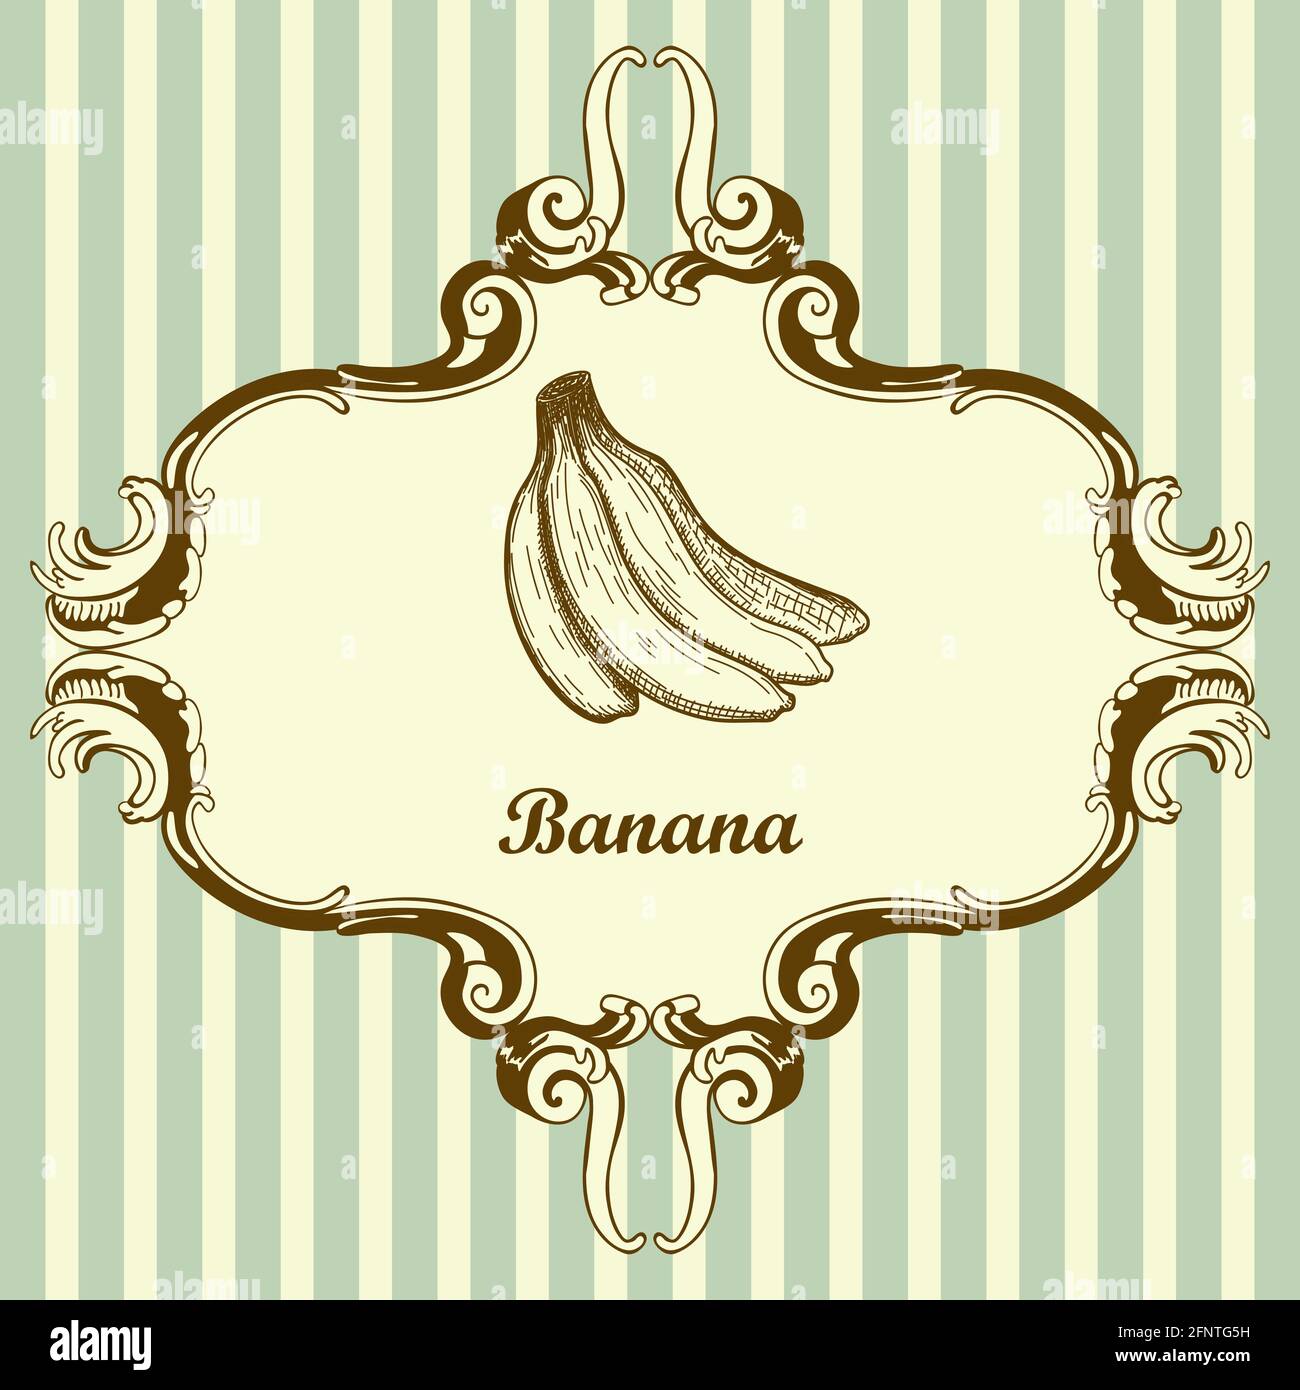 Icon Of Banana. Hand Drawn Sketch. Retro Vintage Design. Vector Illustration. Stock Vector